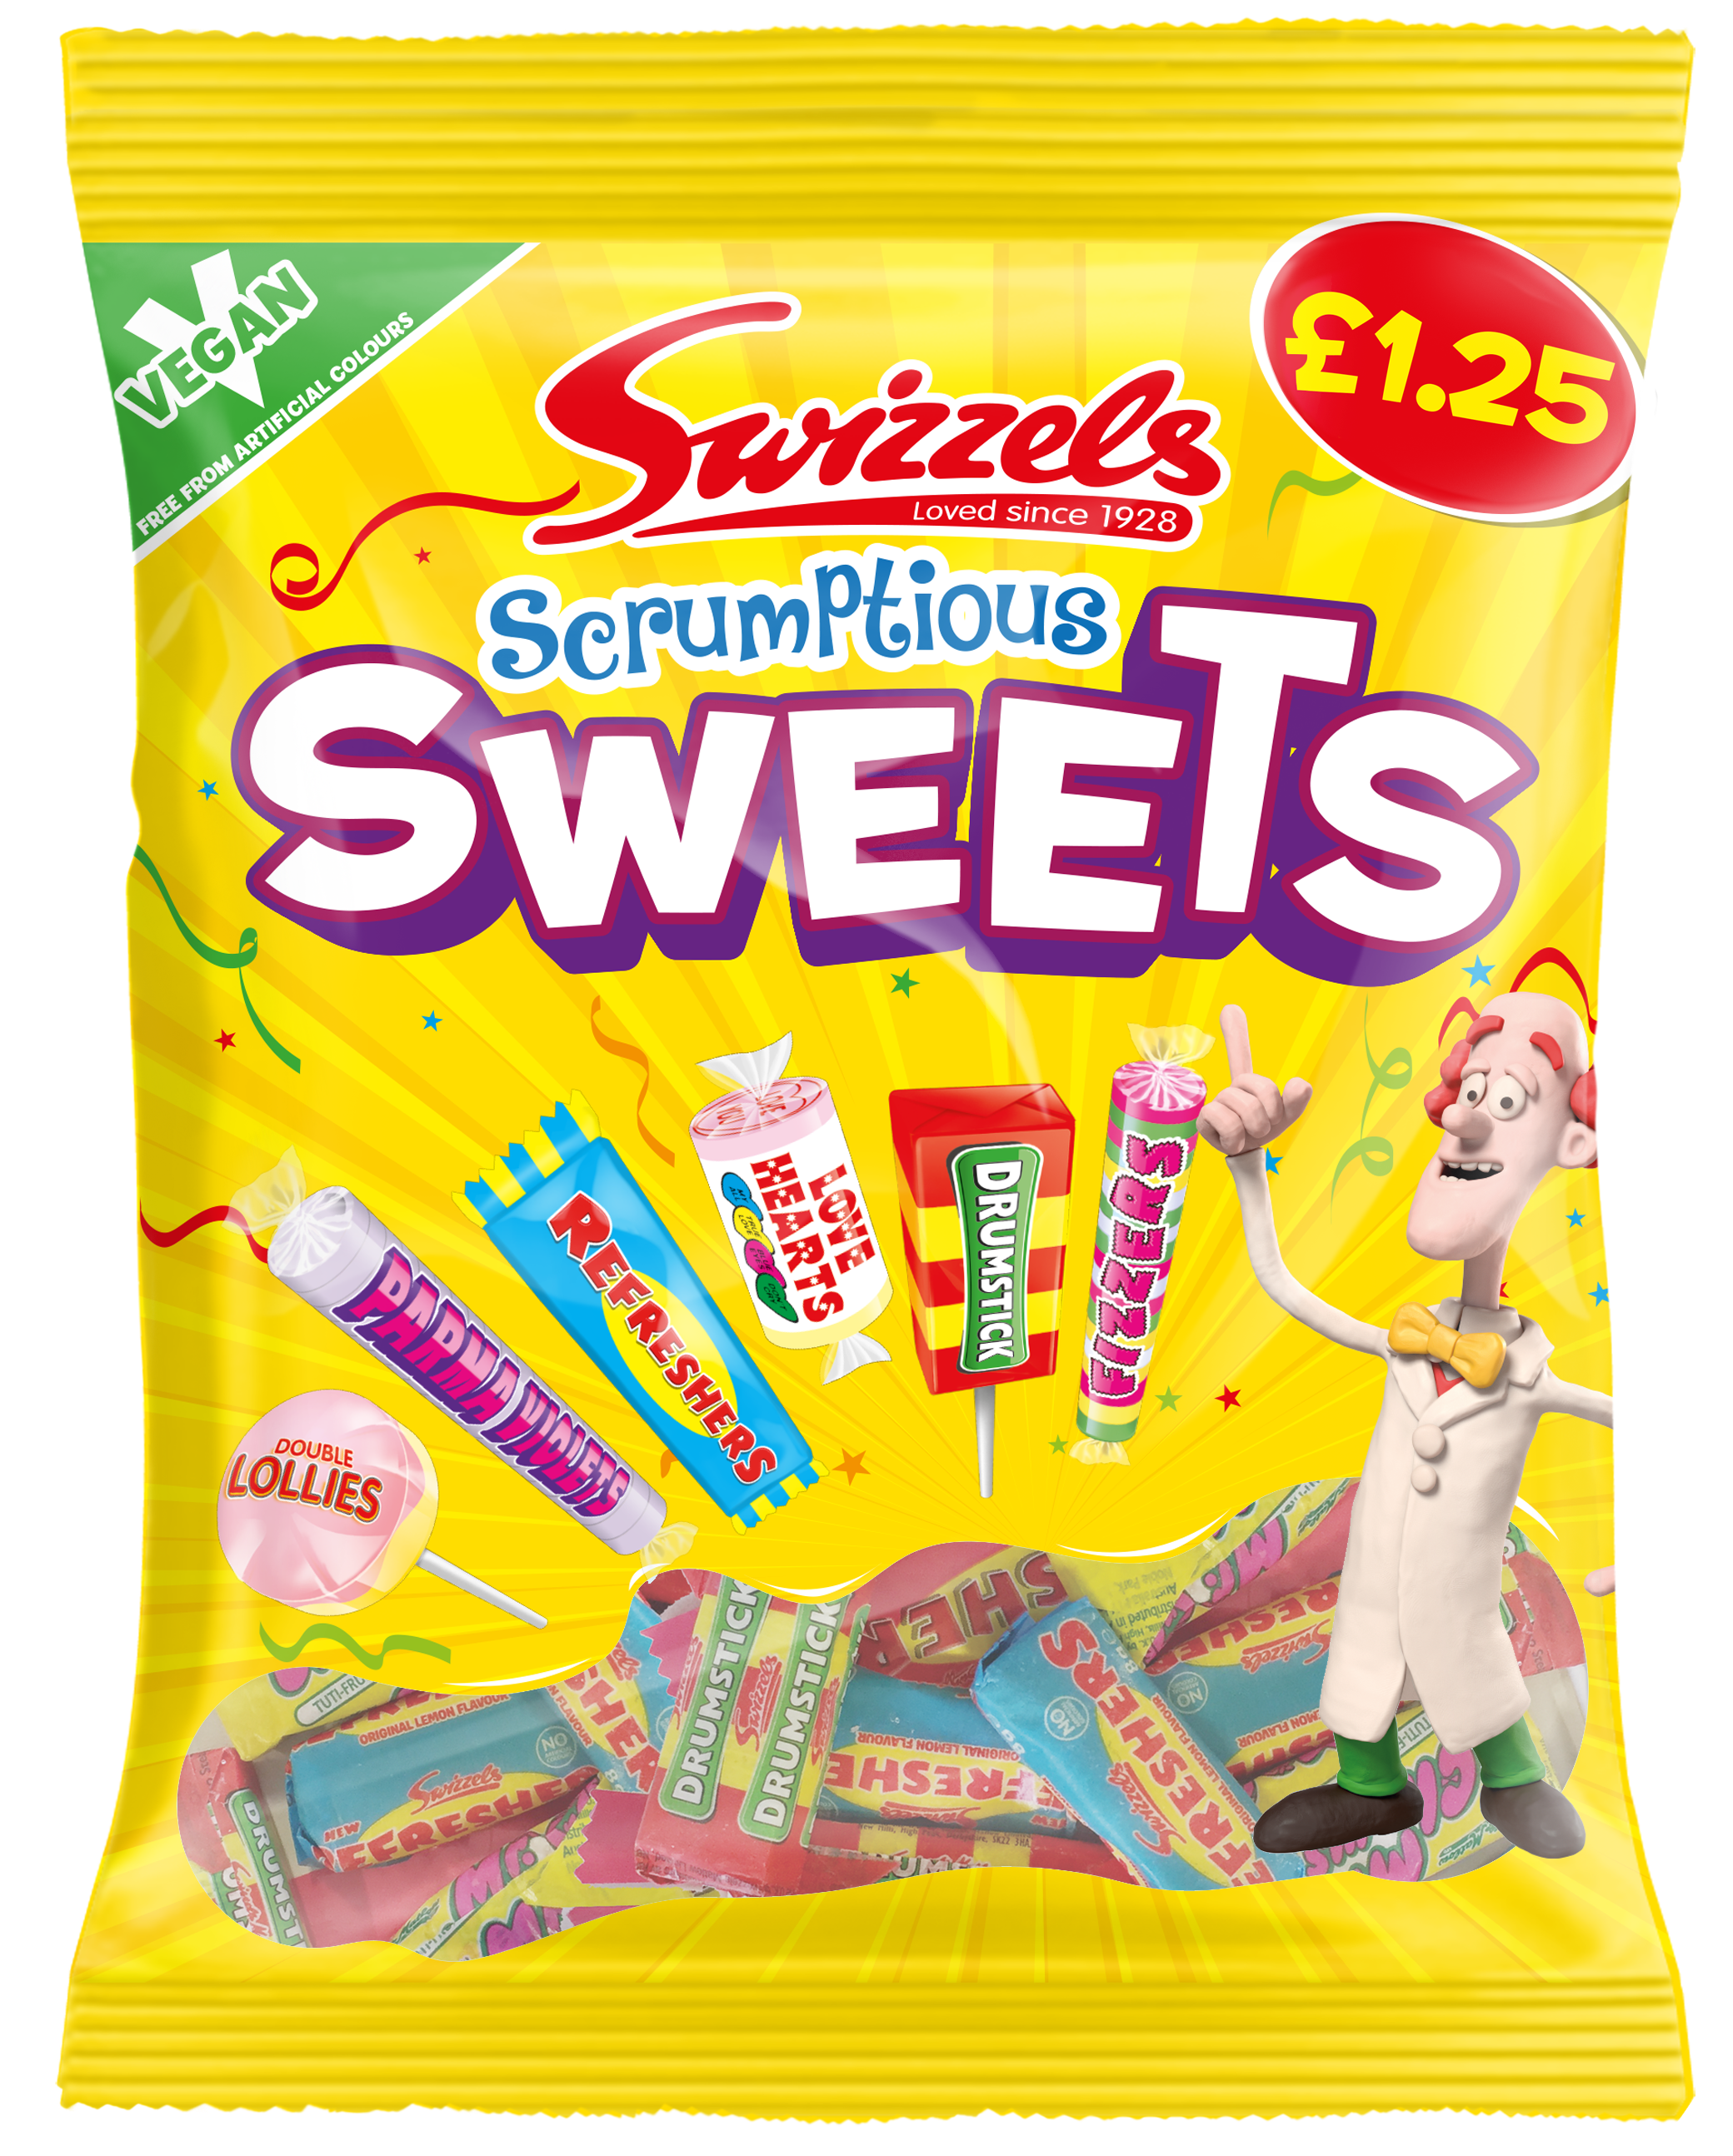 Swizzels Scrumptious Sweets £1.25 PMP 12x134g